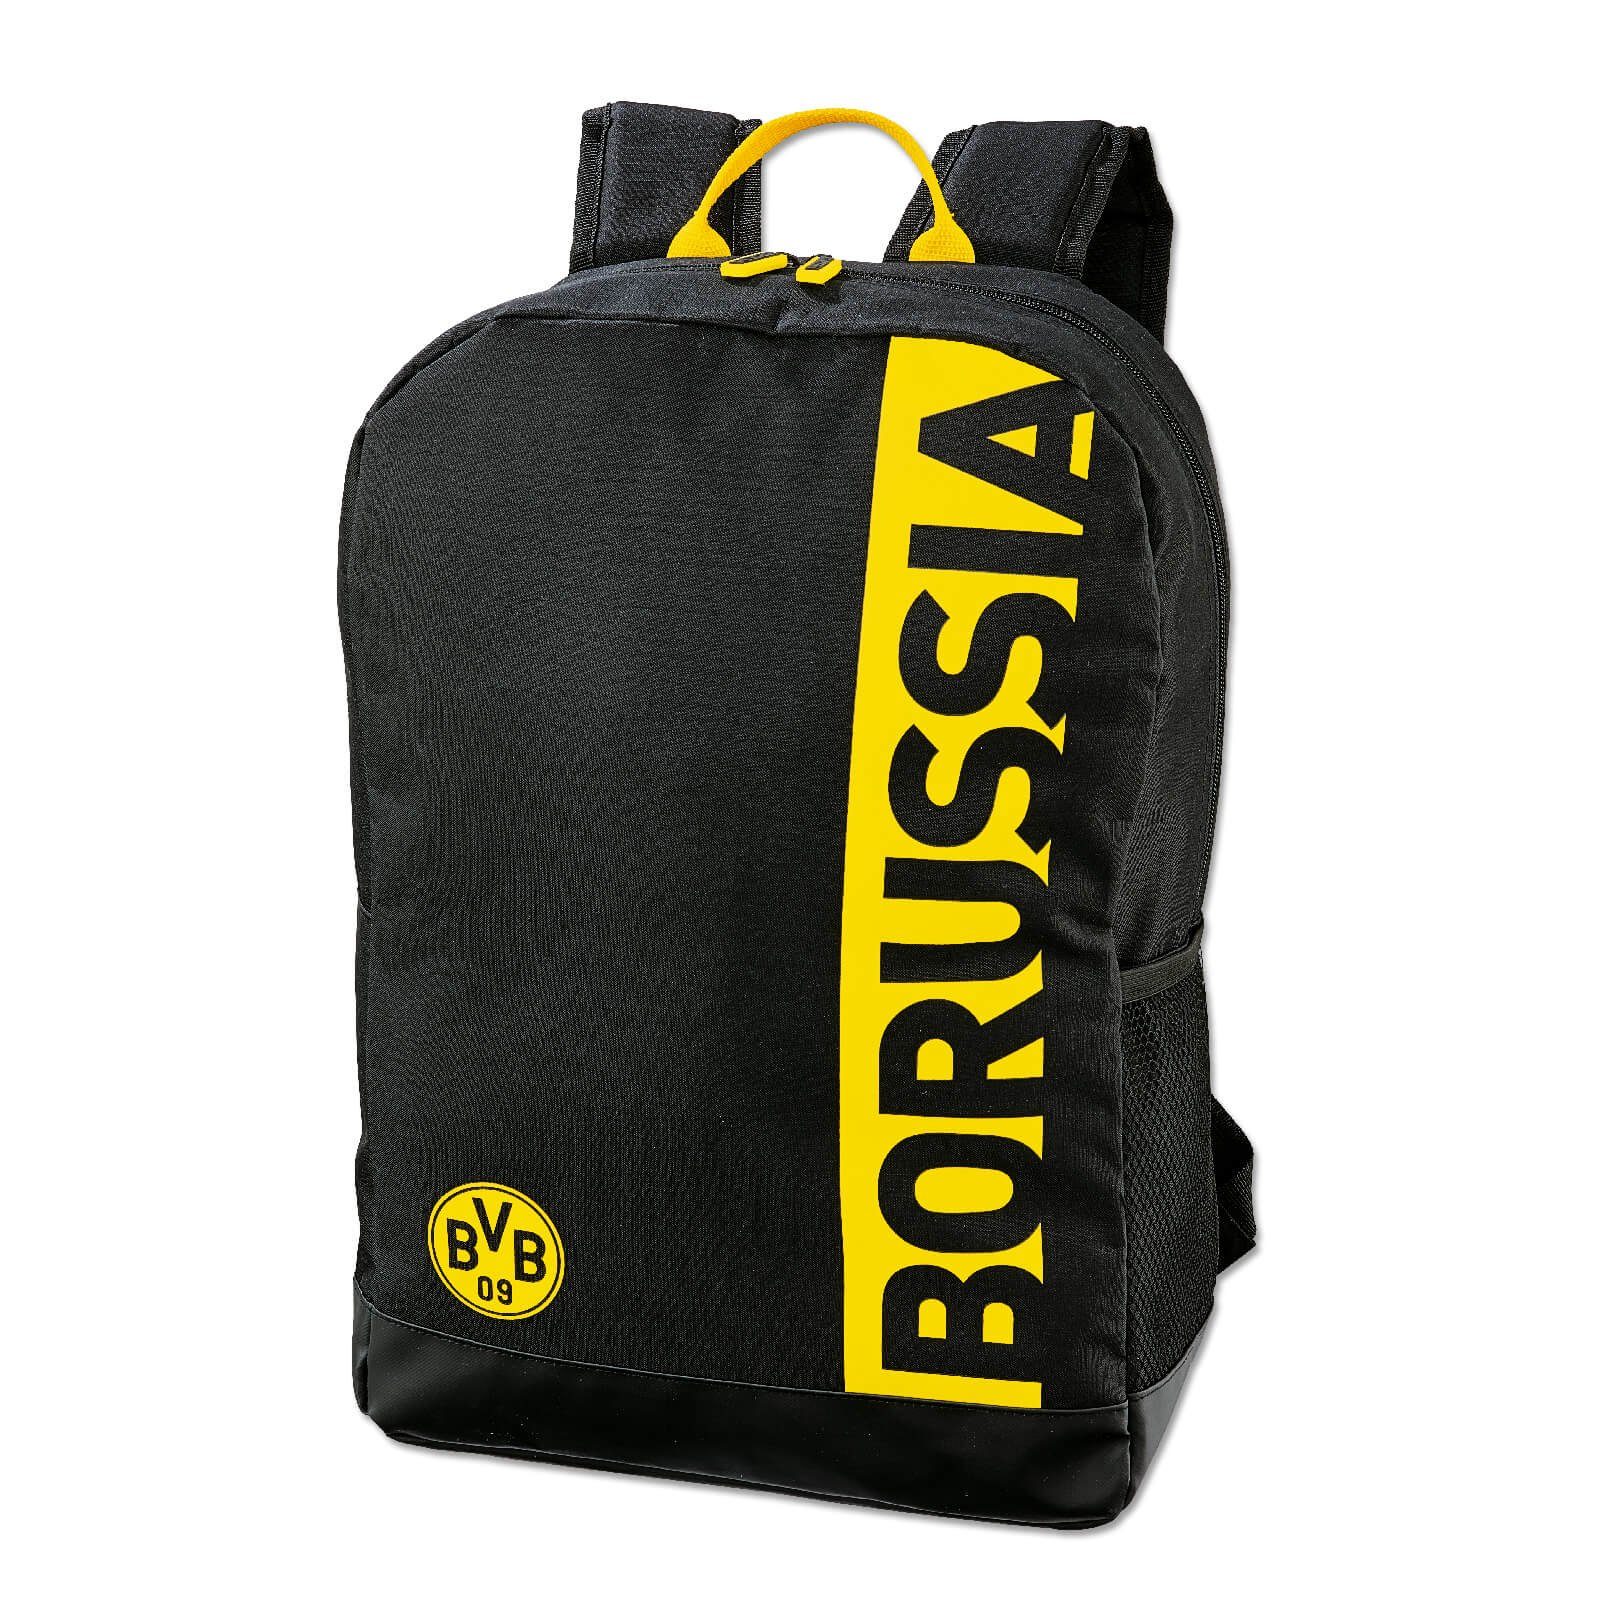 BVB Freizeitrucksack (Packung) BORUSSIA-Rucksack